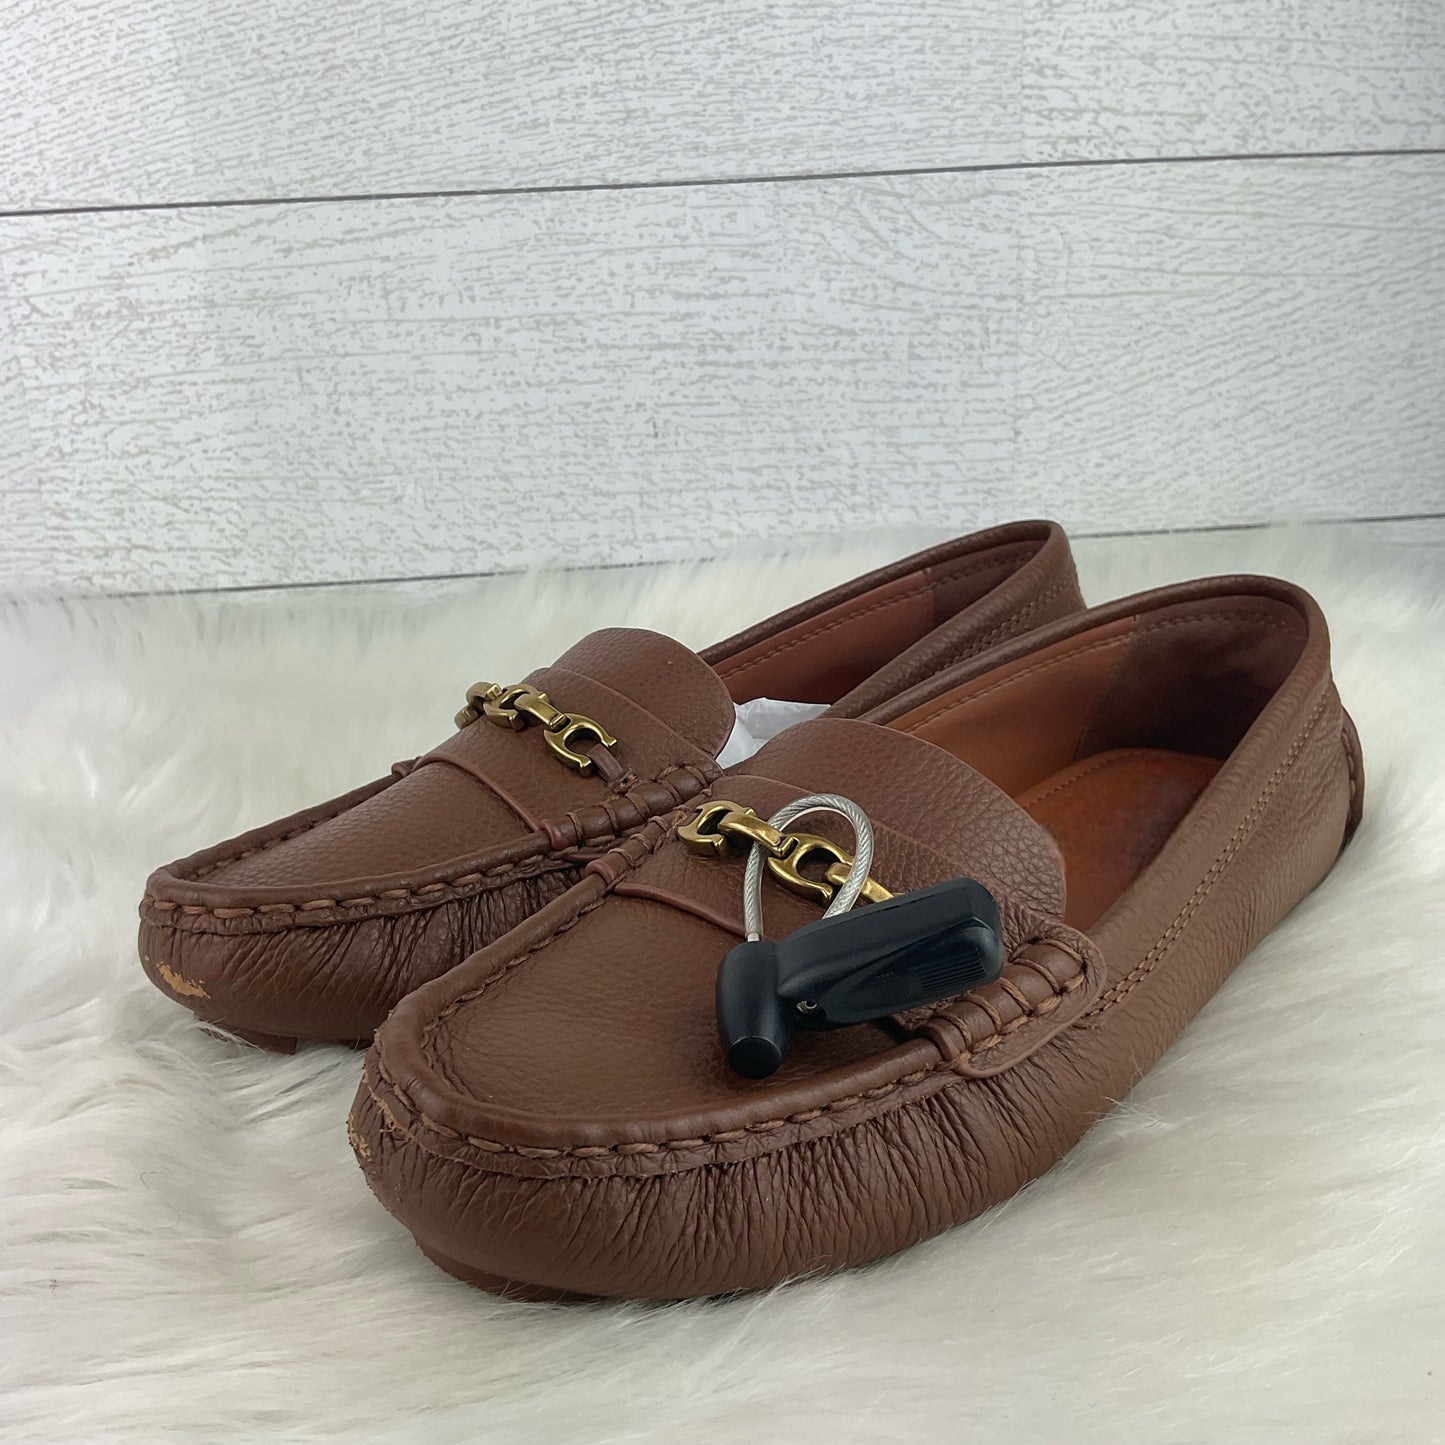 Brown Shoes Designer Coach, Size 7.5